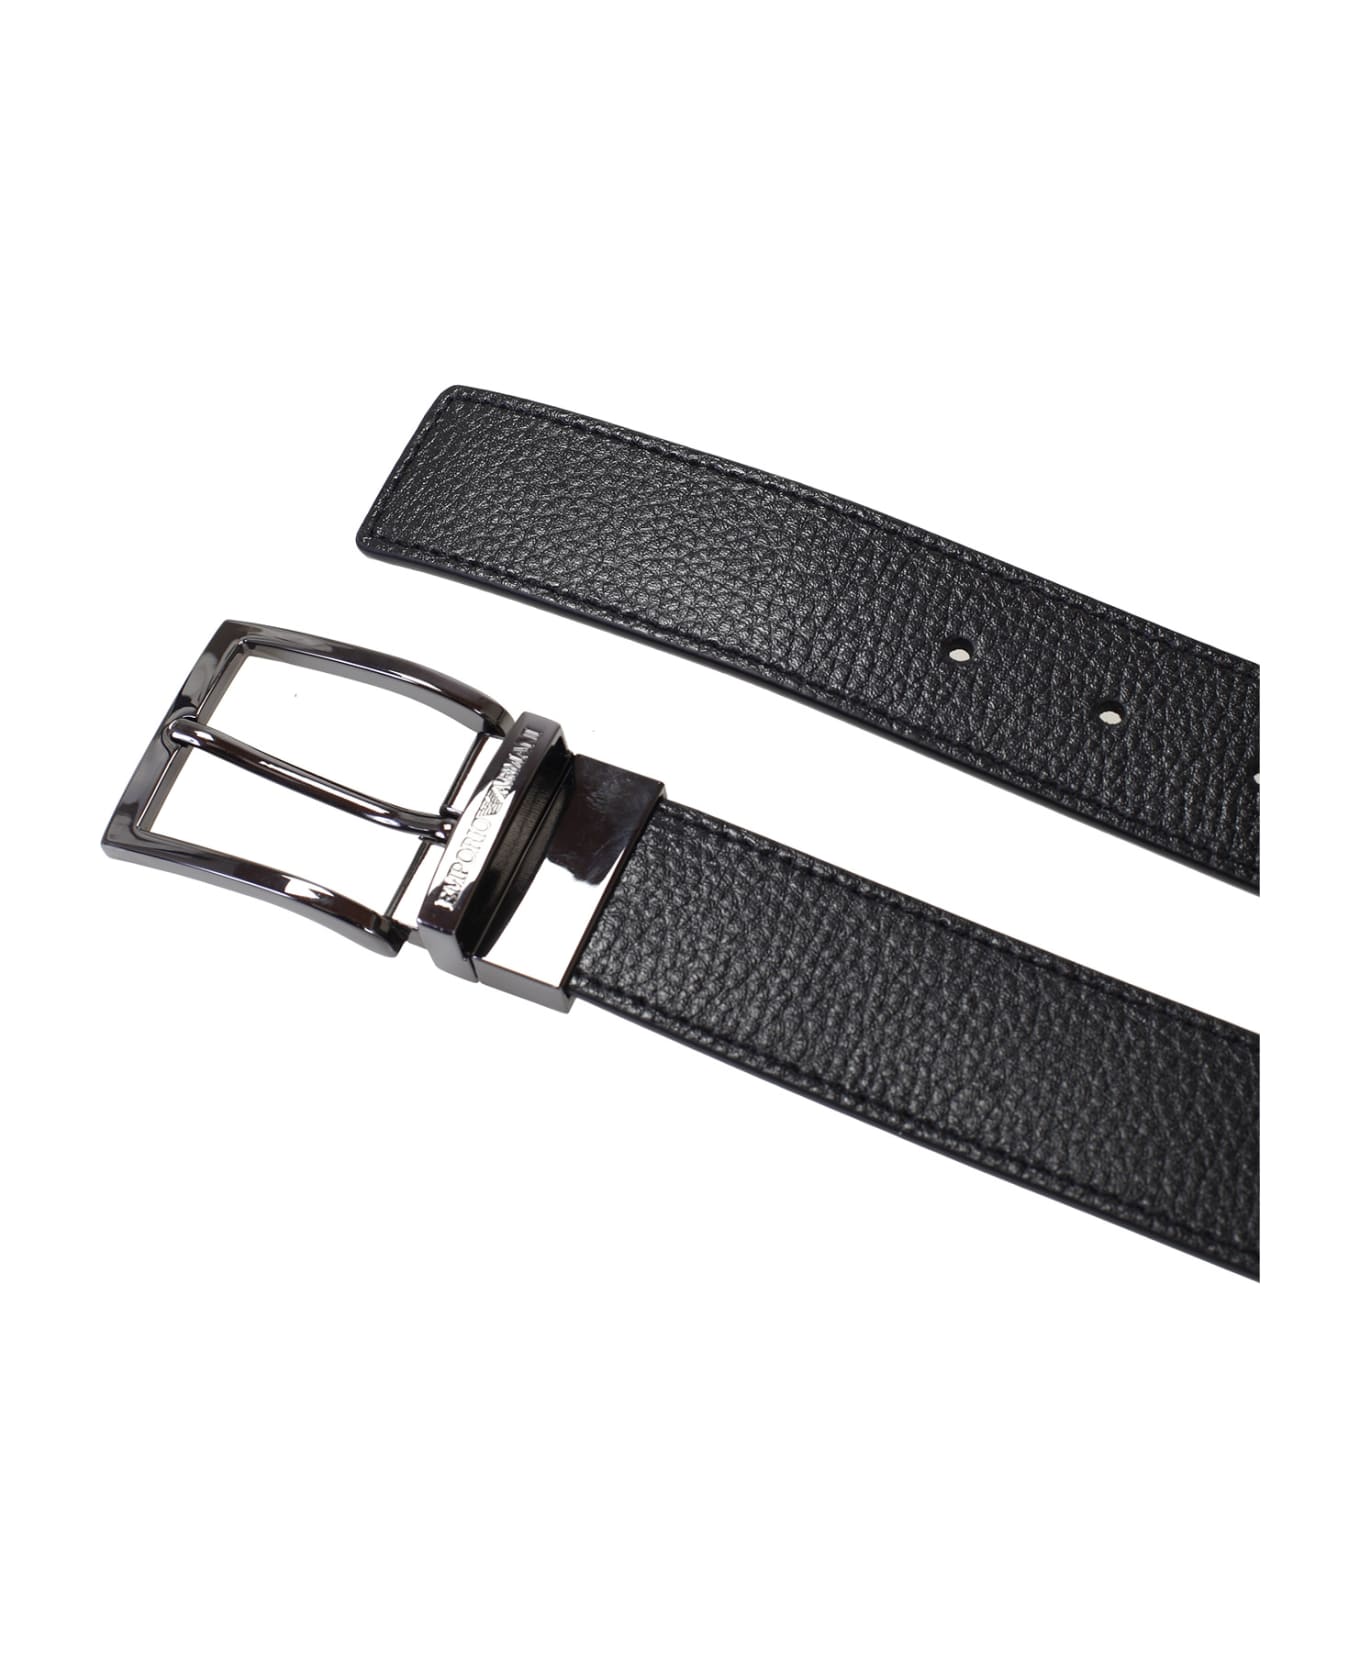 Emporio Armani Leather Belt - Nero/grigio